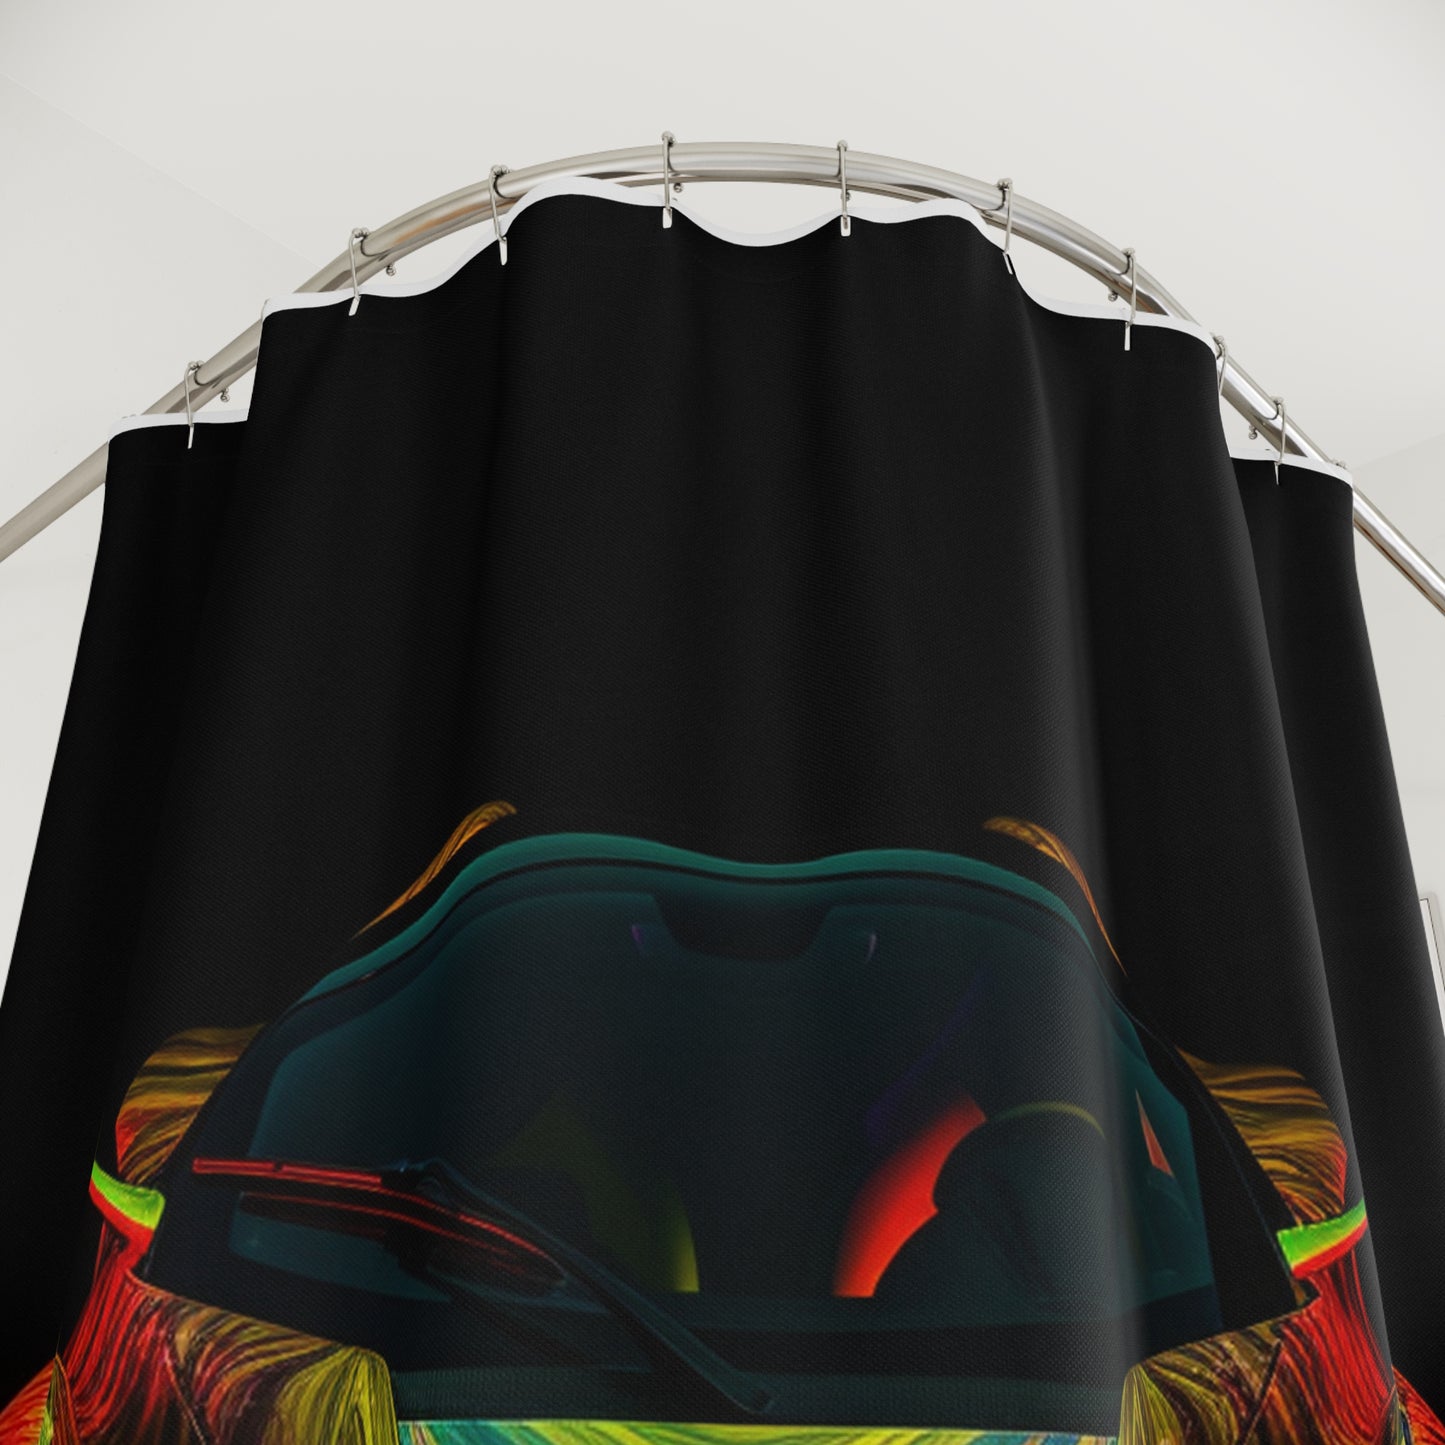 Polyester Shower Curtain Ferrari Neon 1